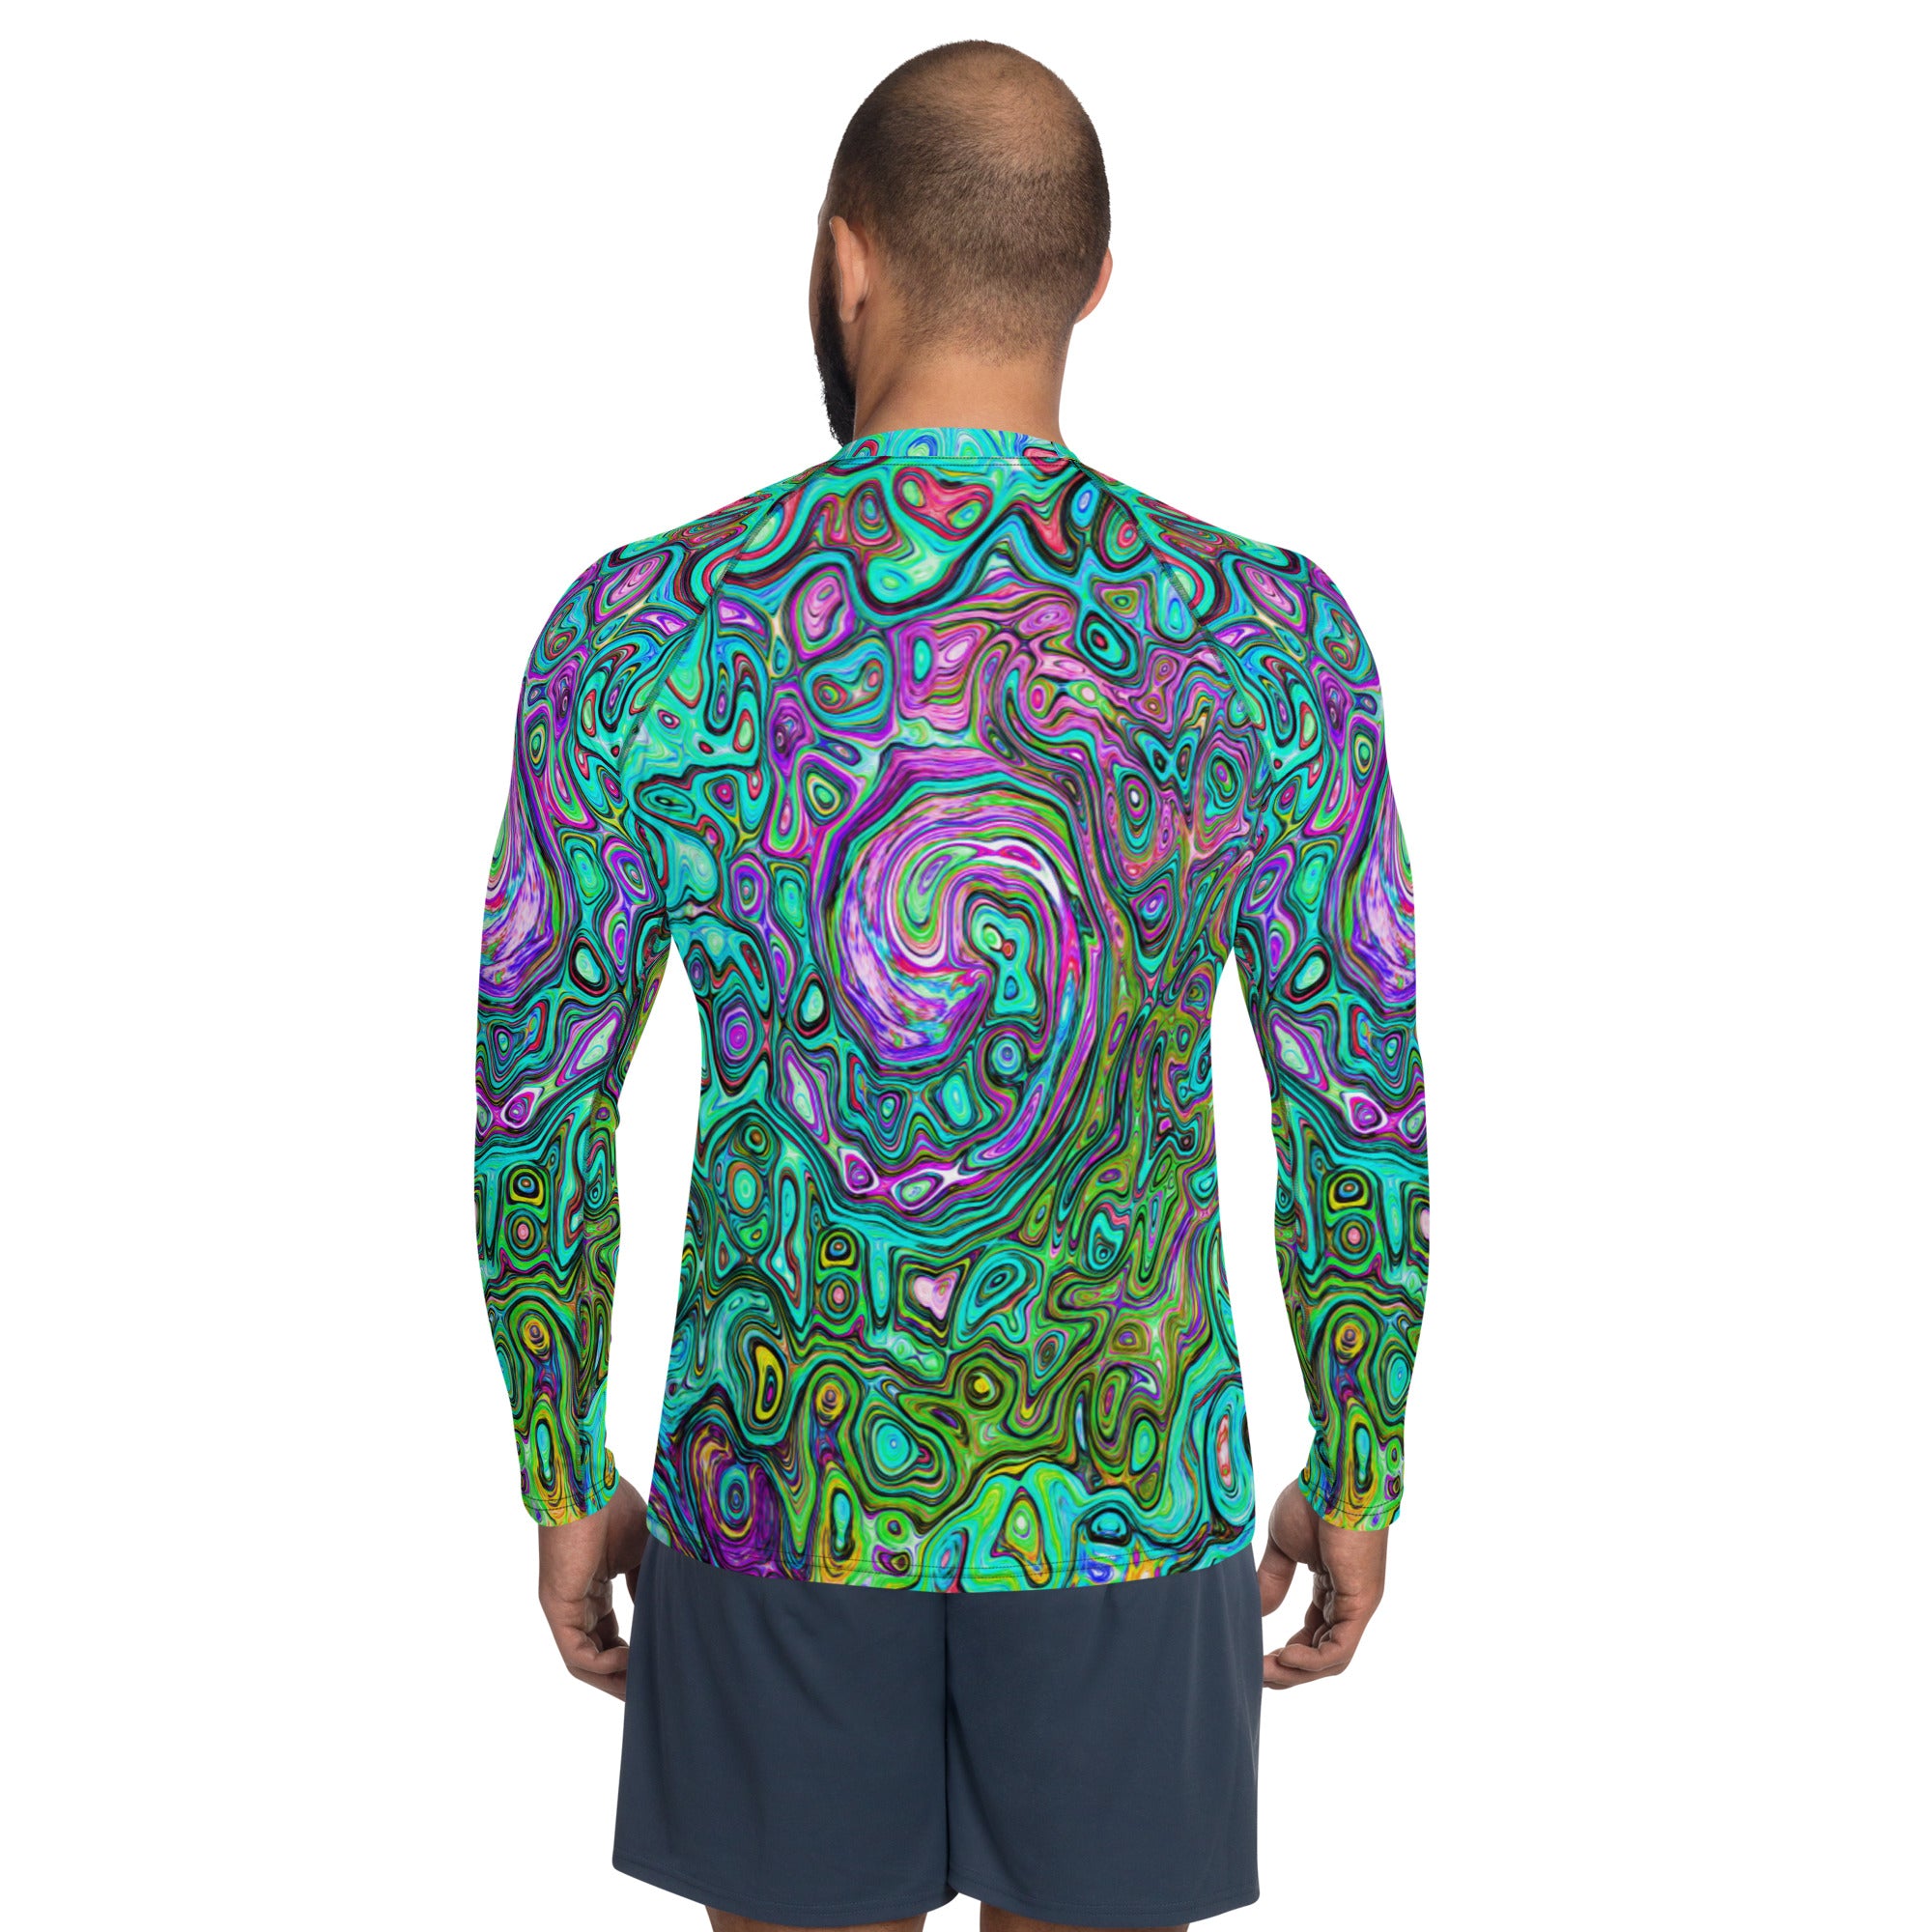 Men's Athletic Rash Guard Shirts, Aquamarine Groovy Abstract Retro Liquid Swirl